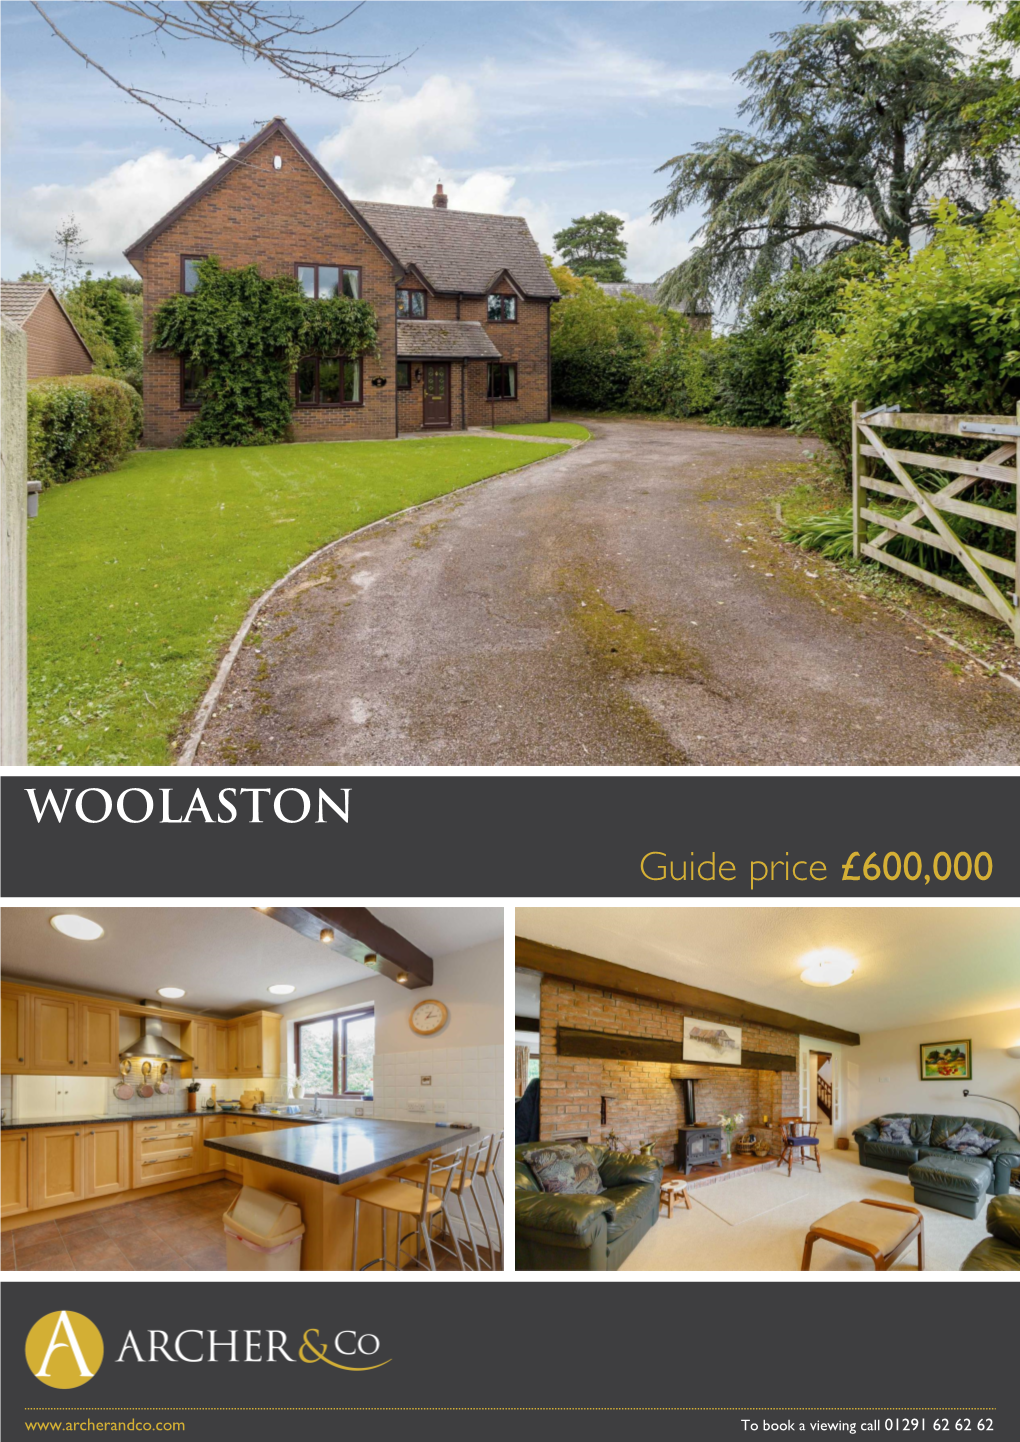 WOOLASTON Guide Price £600,000